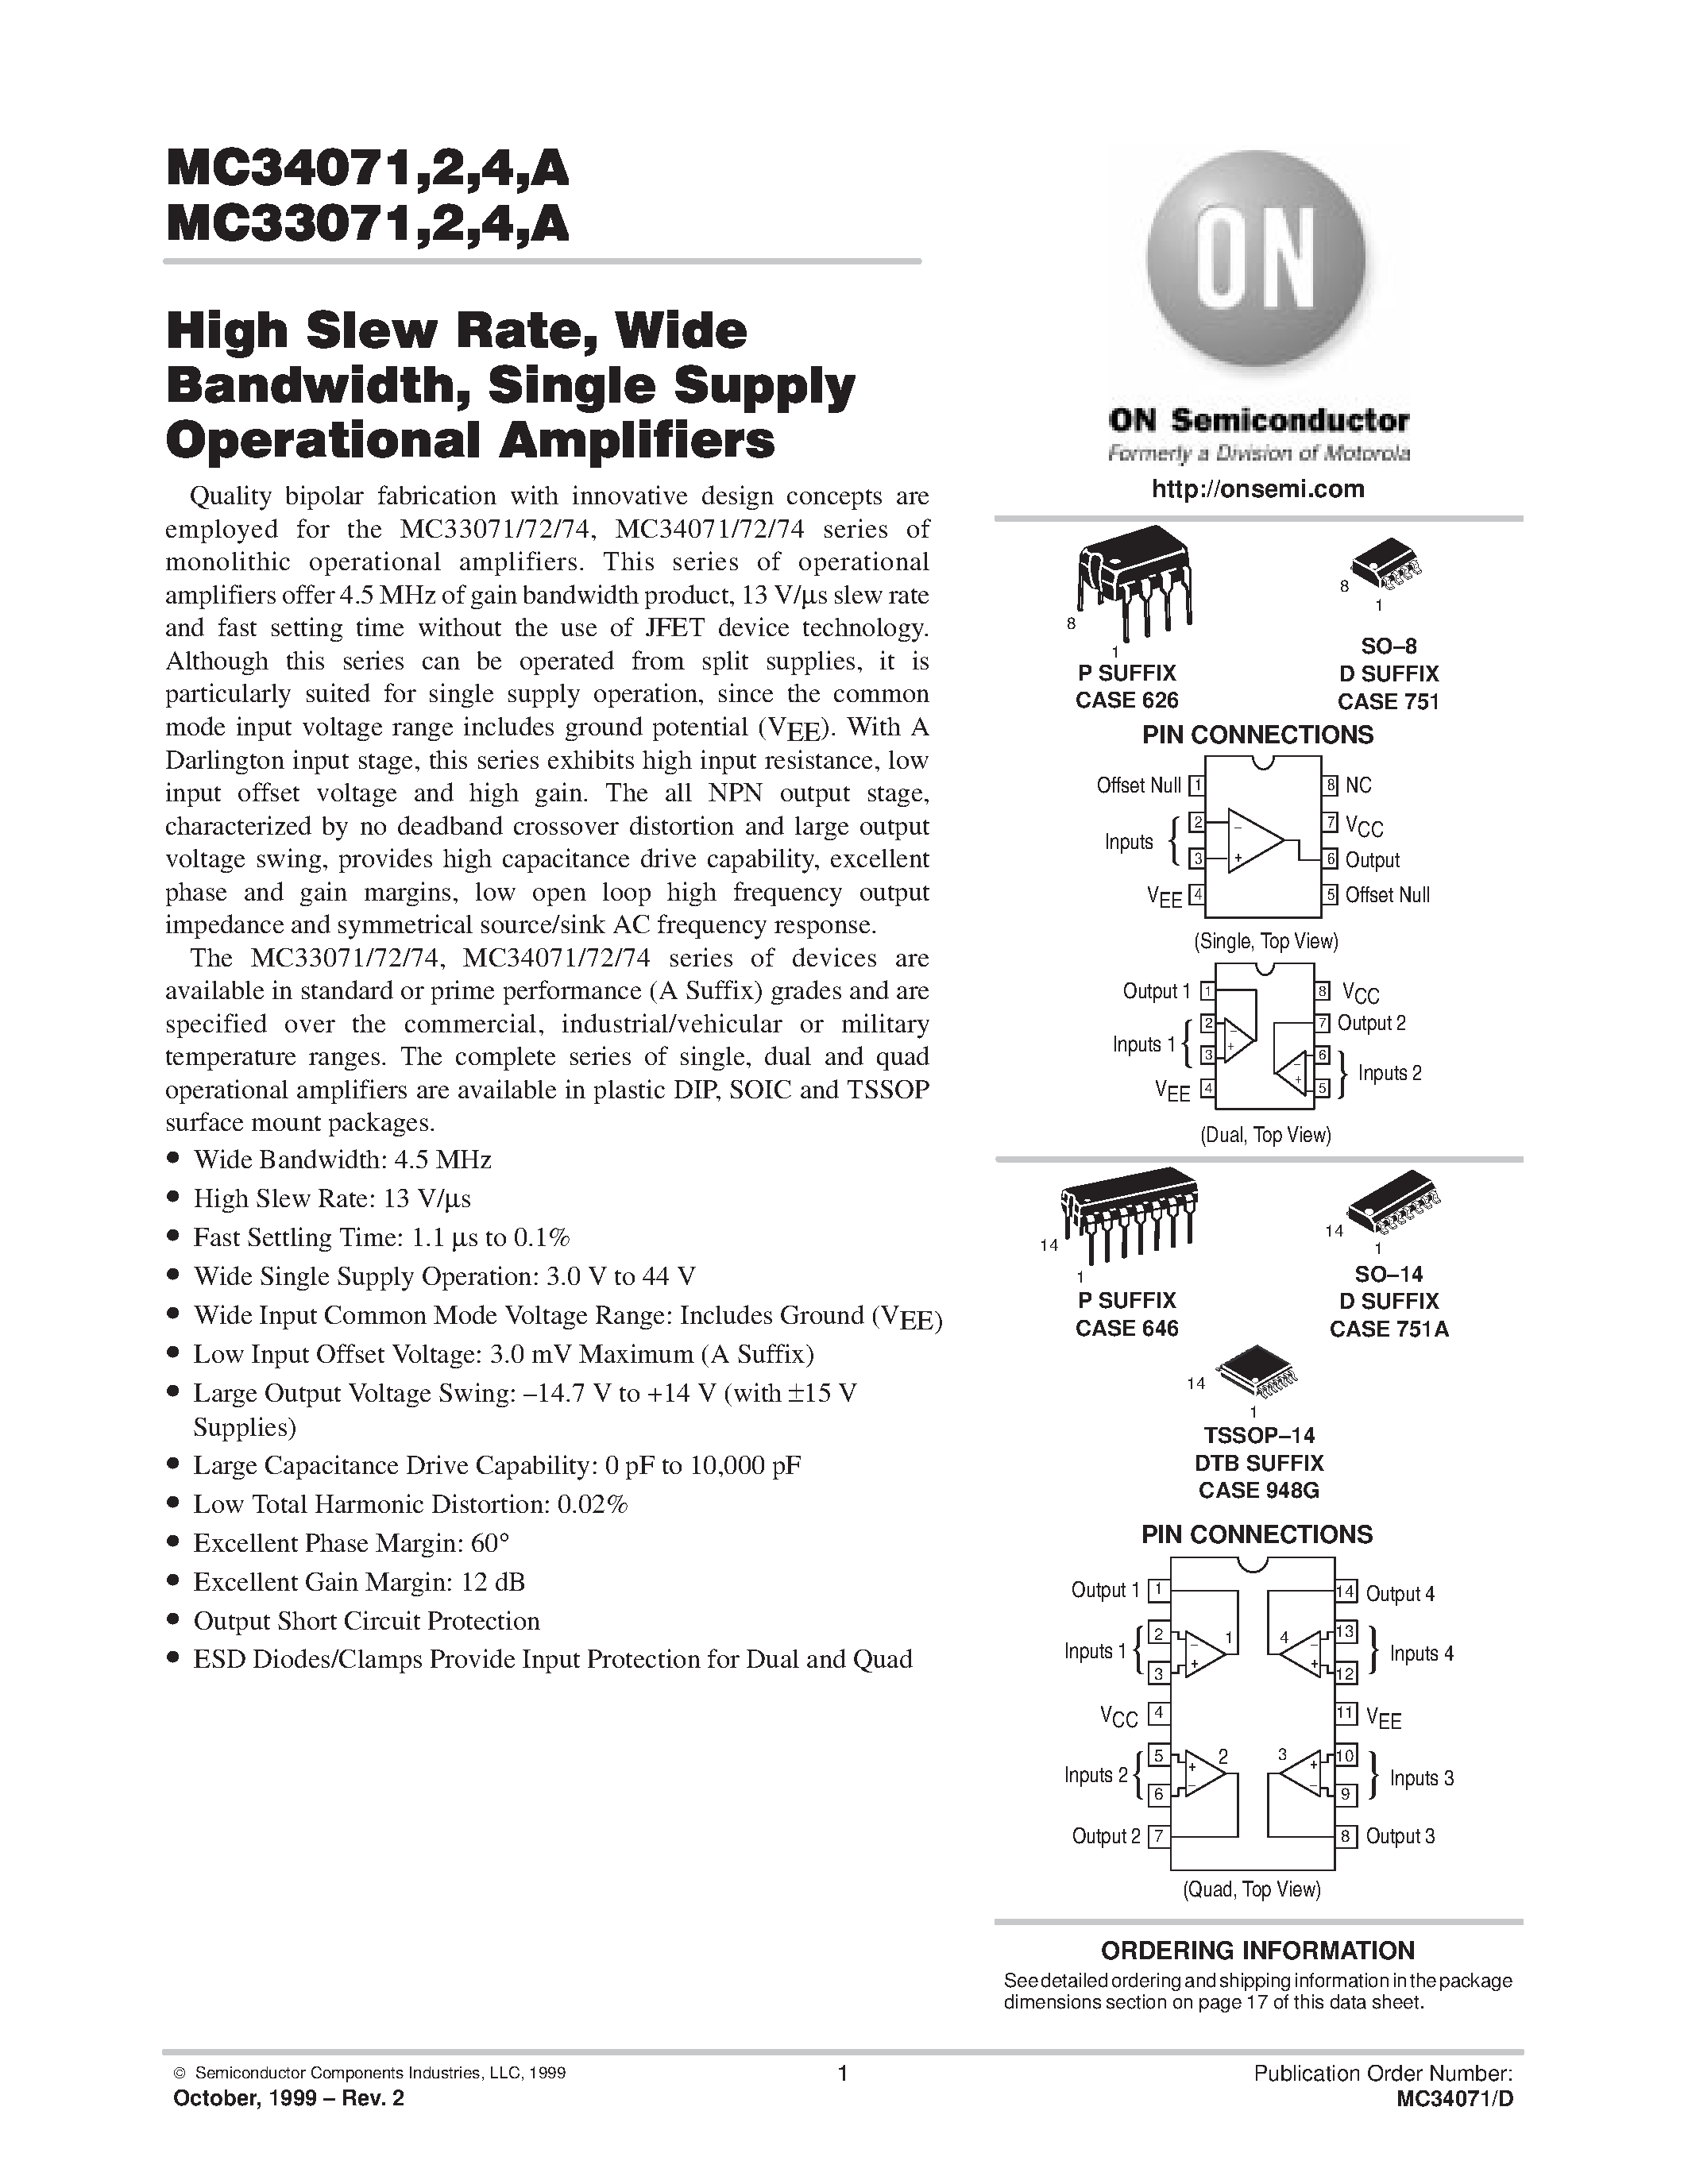 Datasheet MC33071 - (MC33071 / MC33072 / MC33074) High Slew Rate / Wide Bandwidth / Single Supply Operational Amplifiers page 1